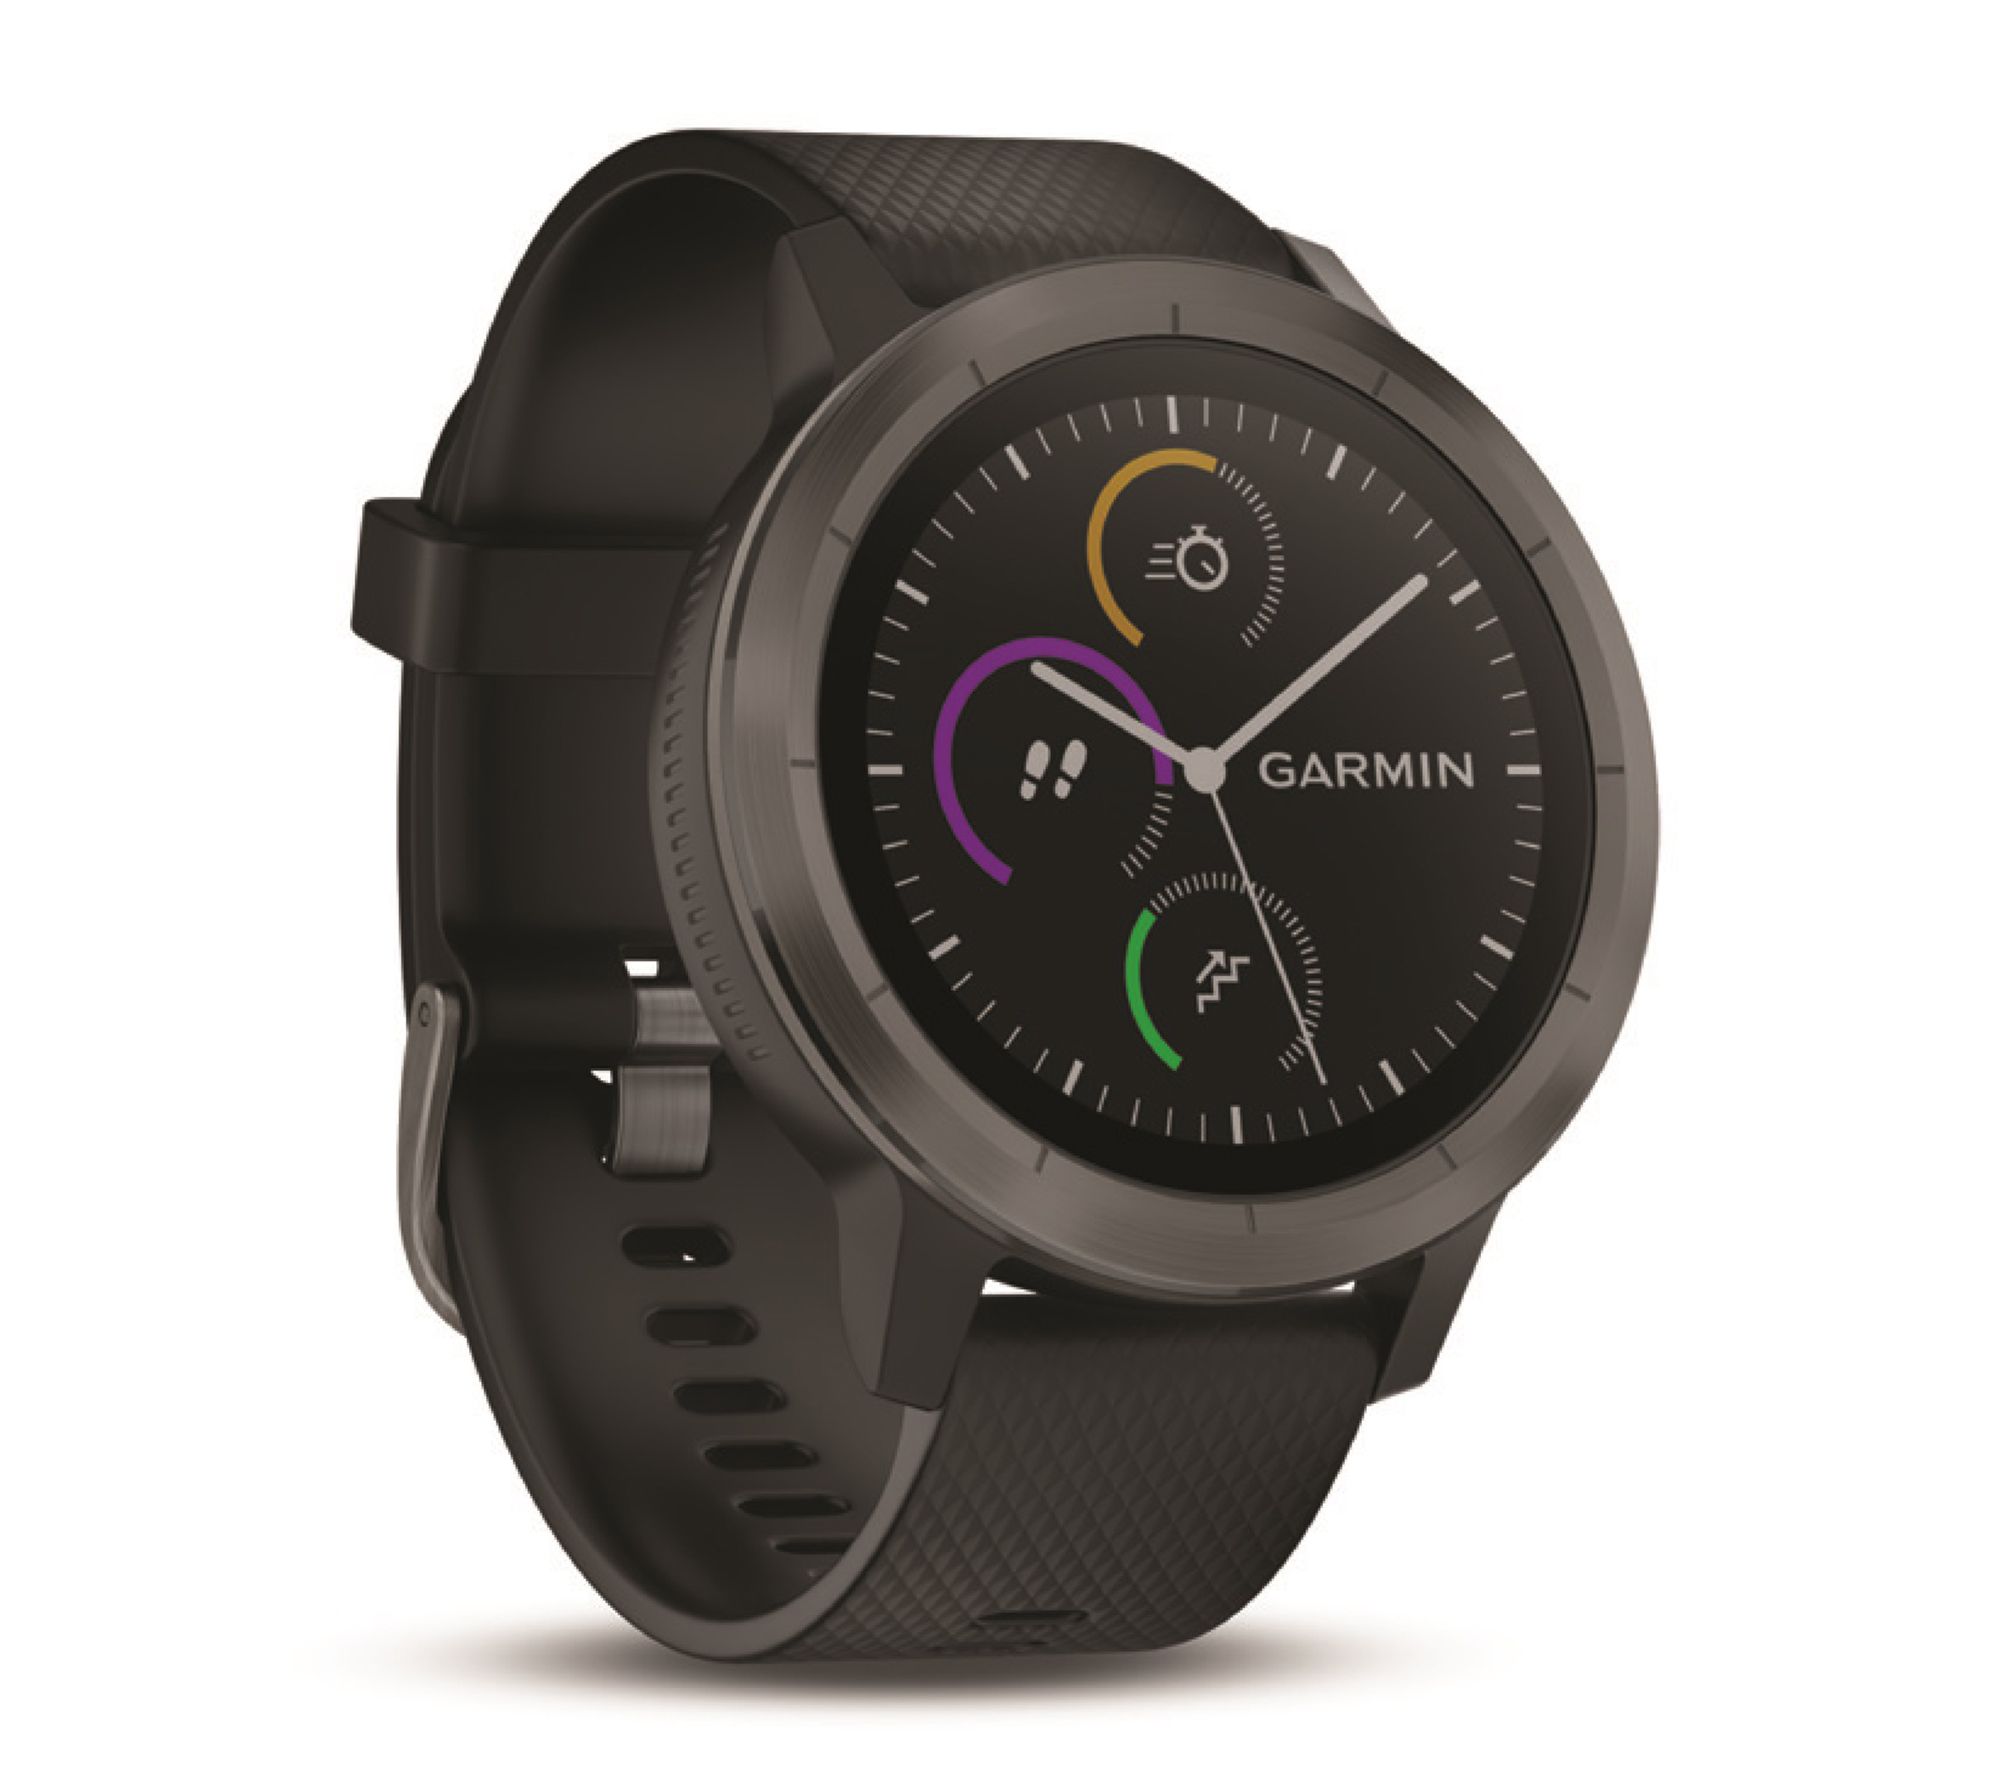 Garmin vivoactive 3 GPS Smartwatch - Slate - QVC.com